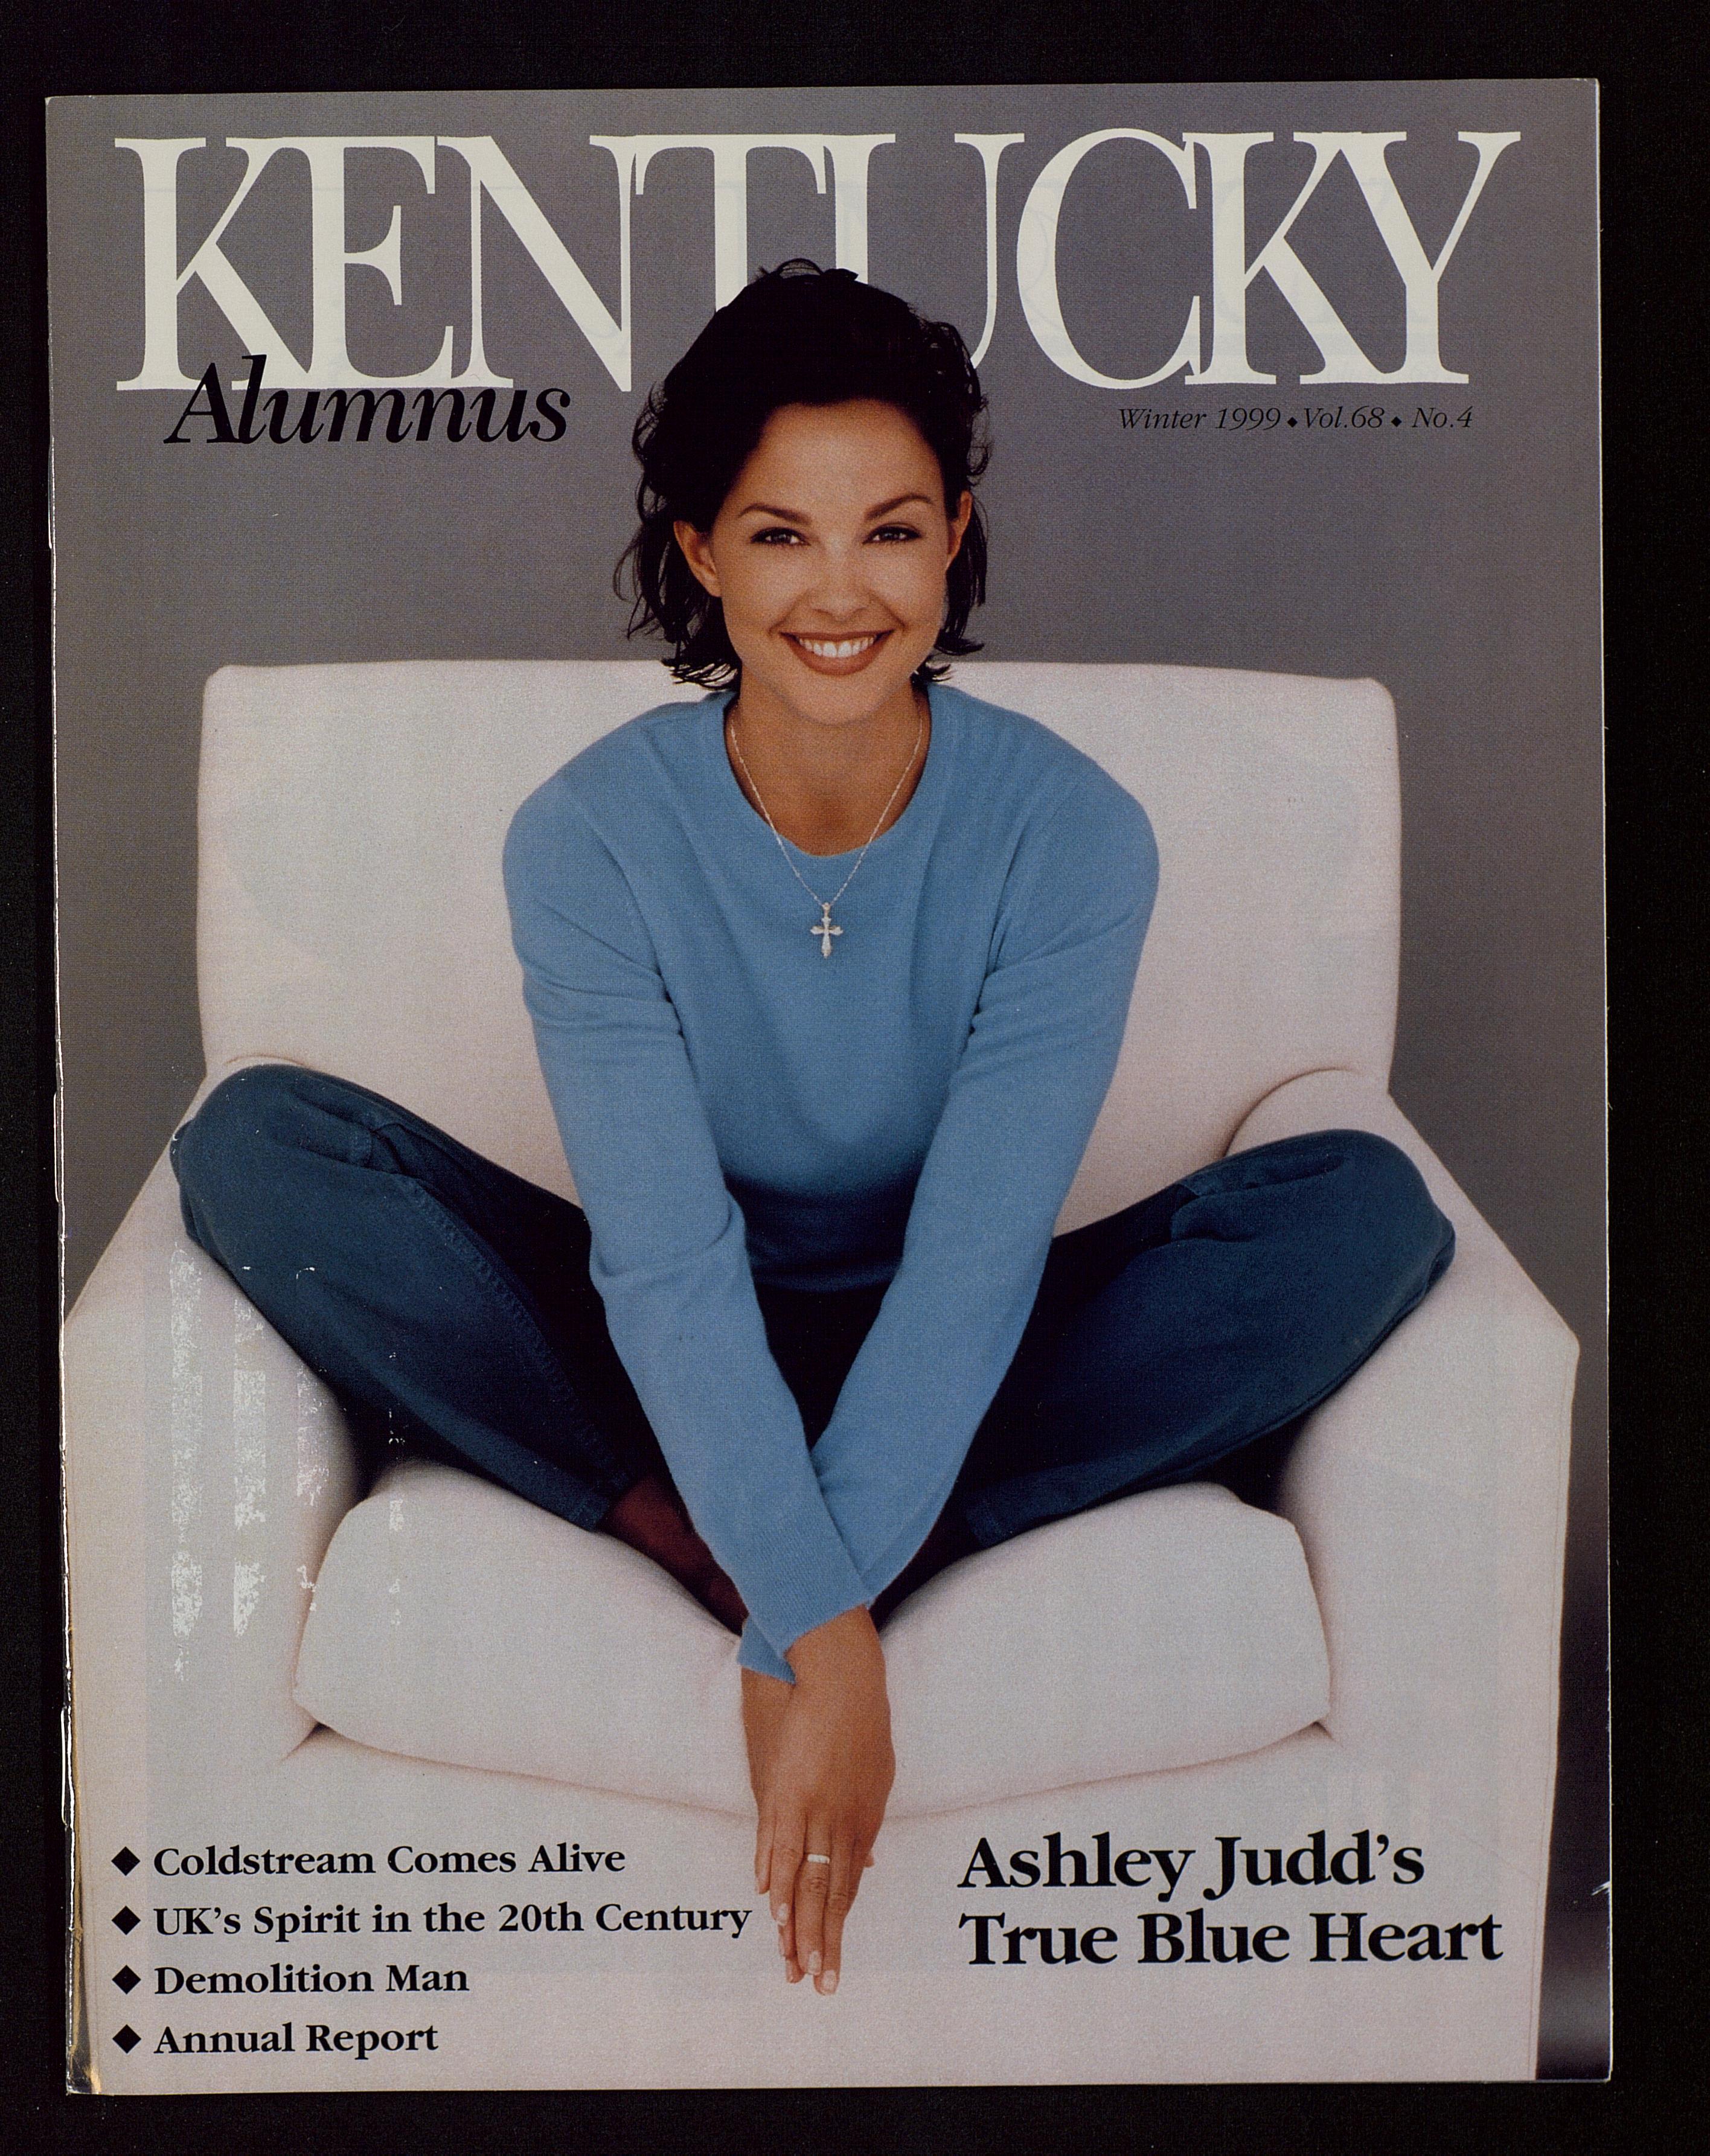 Kentucky Alumnus, vol. 68, no. 4, Winter 1999